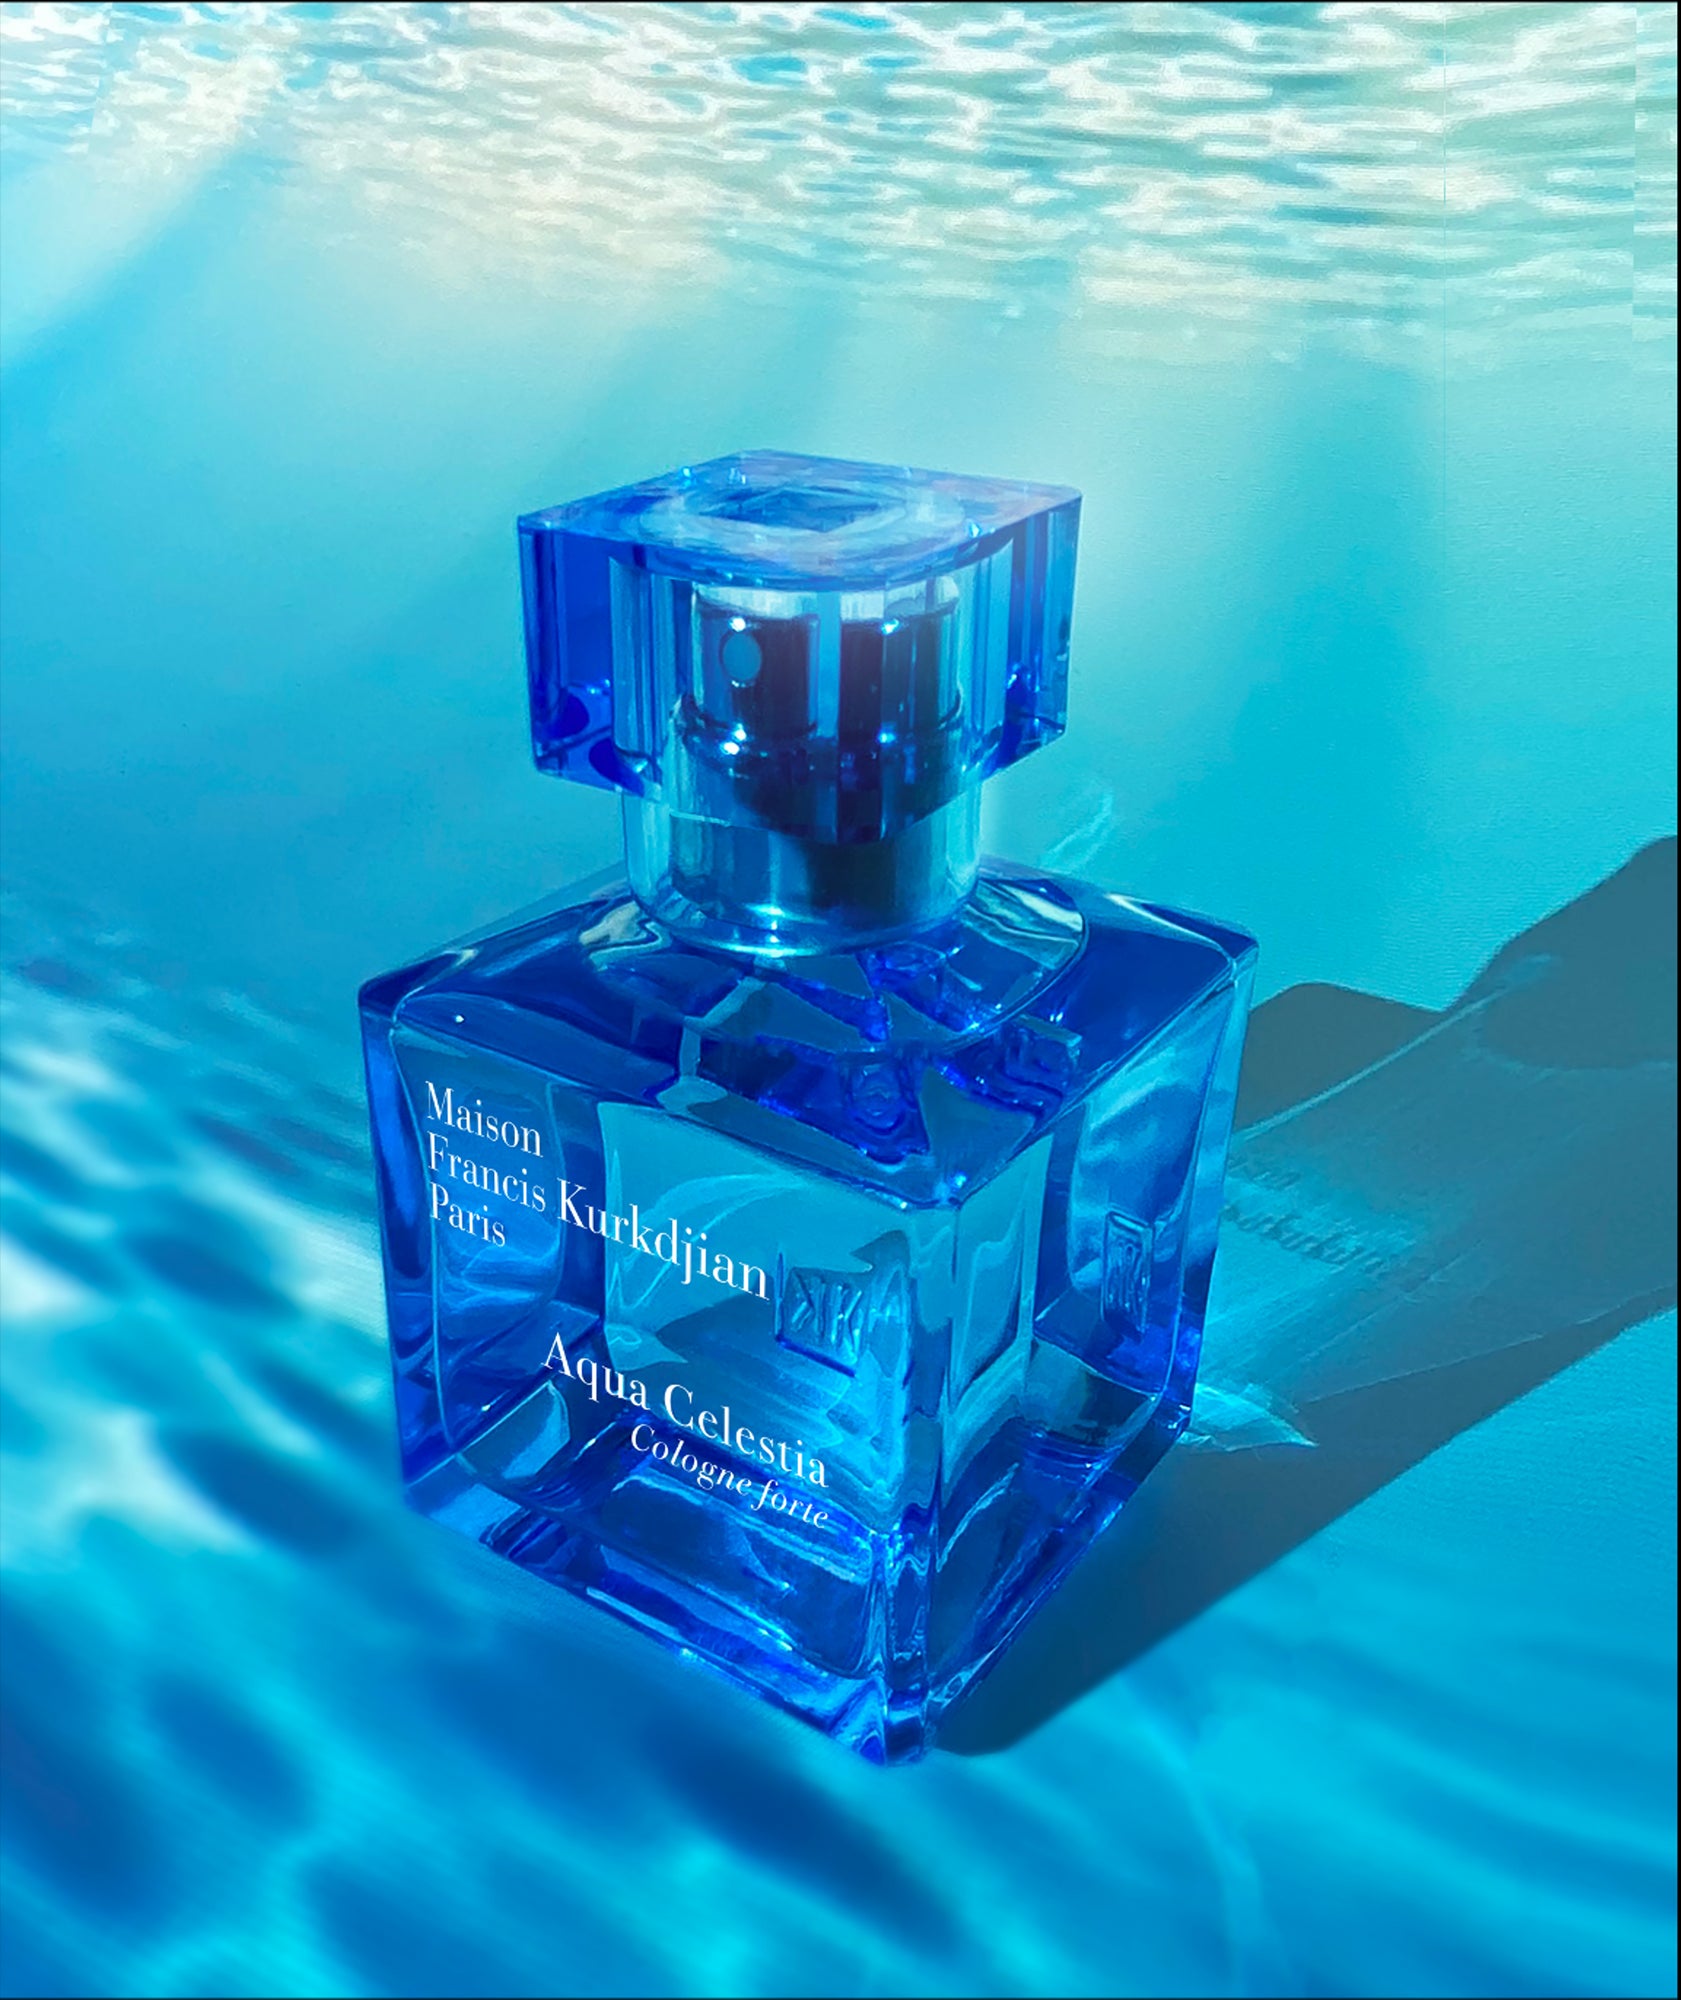 Aardbei dubbel lawaai Aqua Celestia cologne forte - Maison Francis Kurkdjian – Perfume Lounge